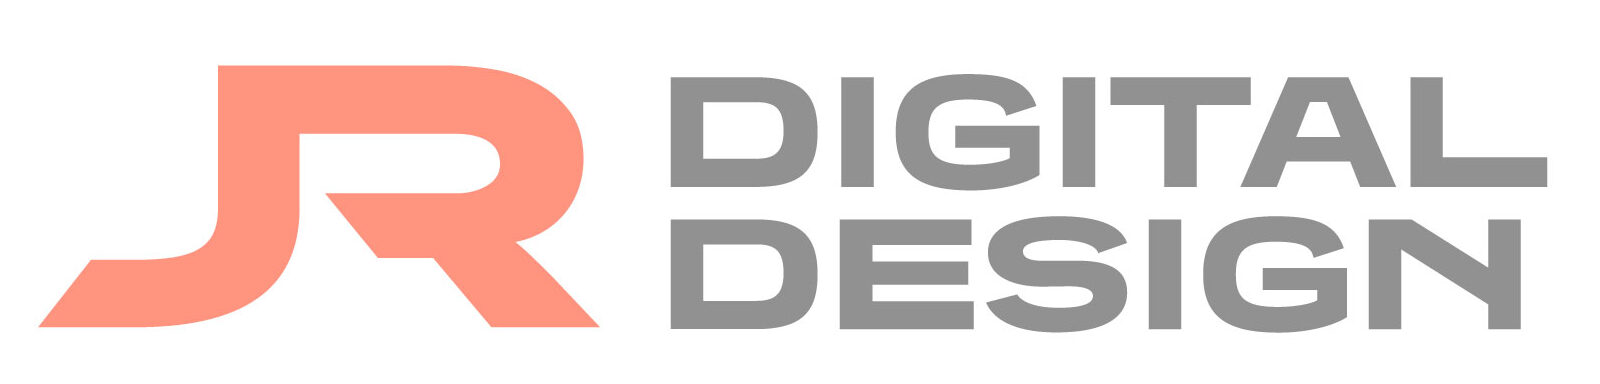 JR Digital Design